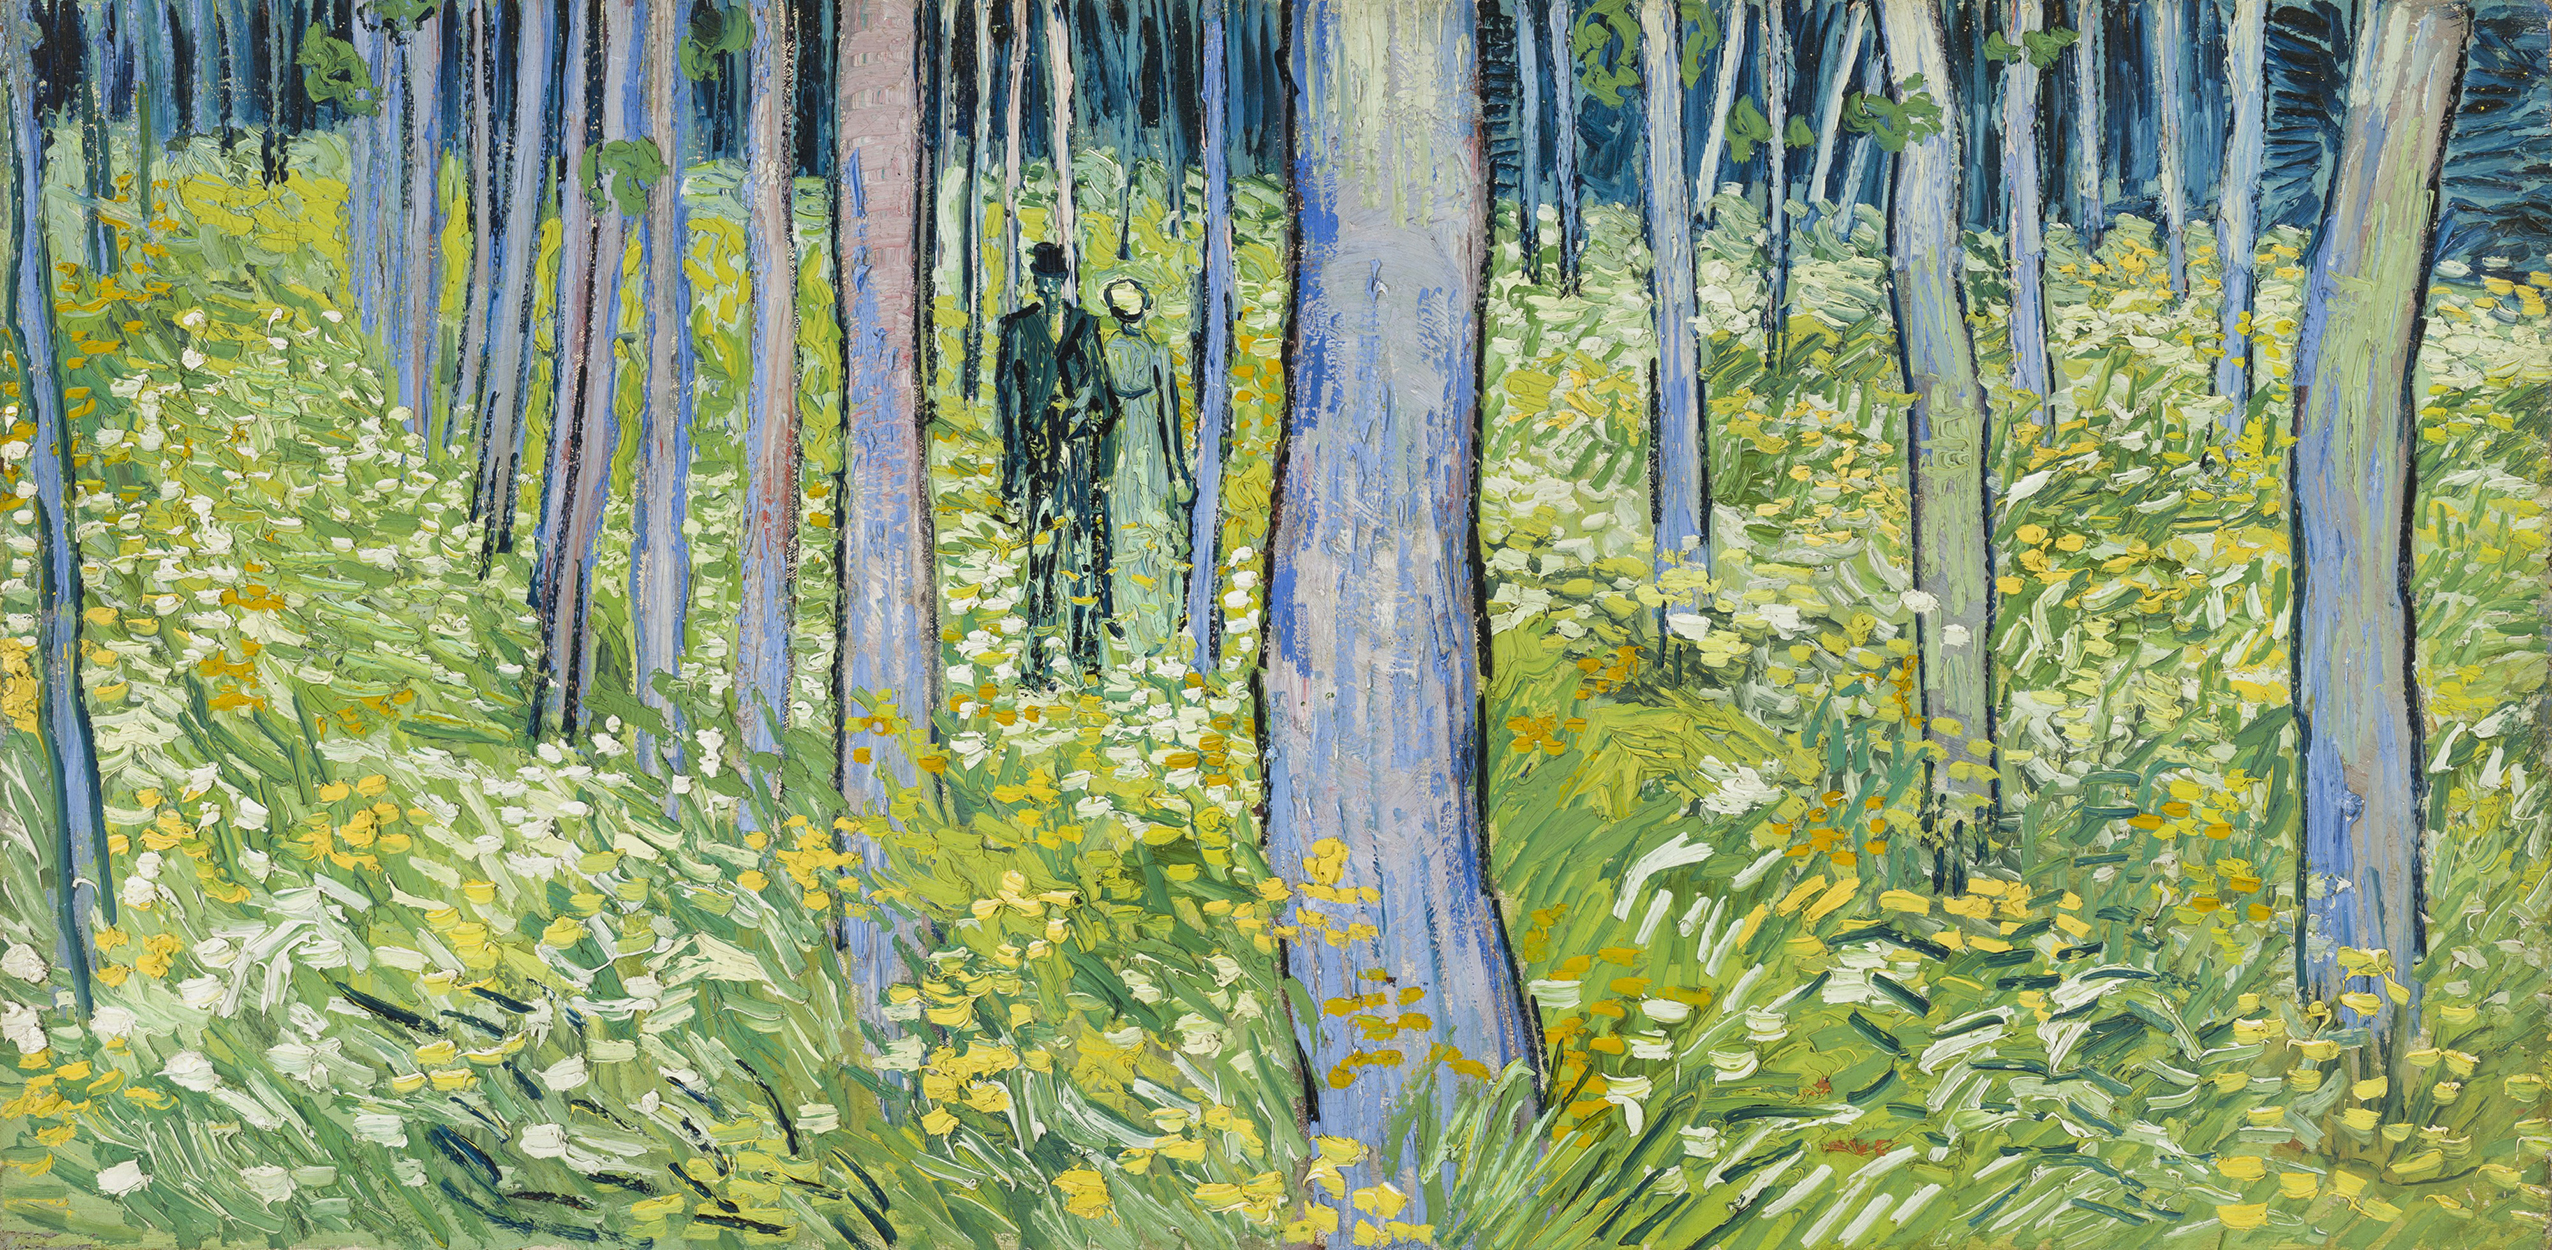 Undergrowth with Two Figures by Vincent van Gogh - 1890 - 49.5 x 99.7cm Cincinnati Art Museum